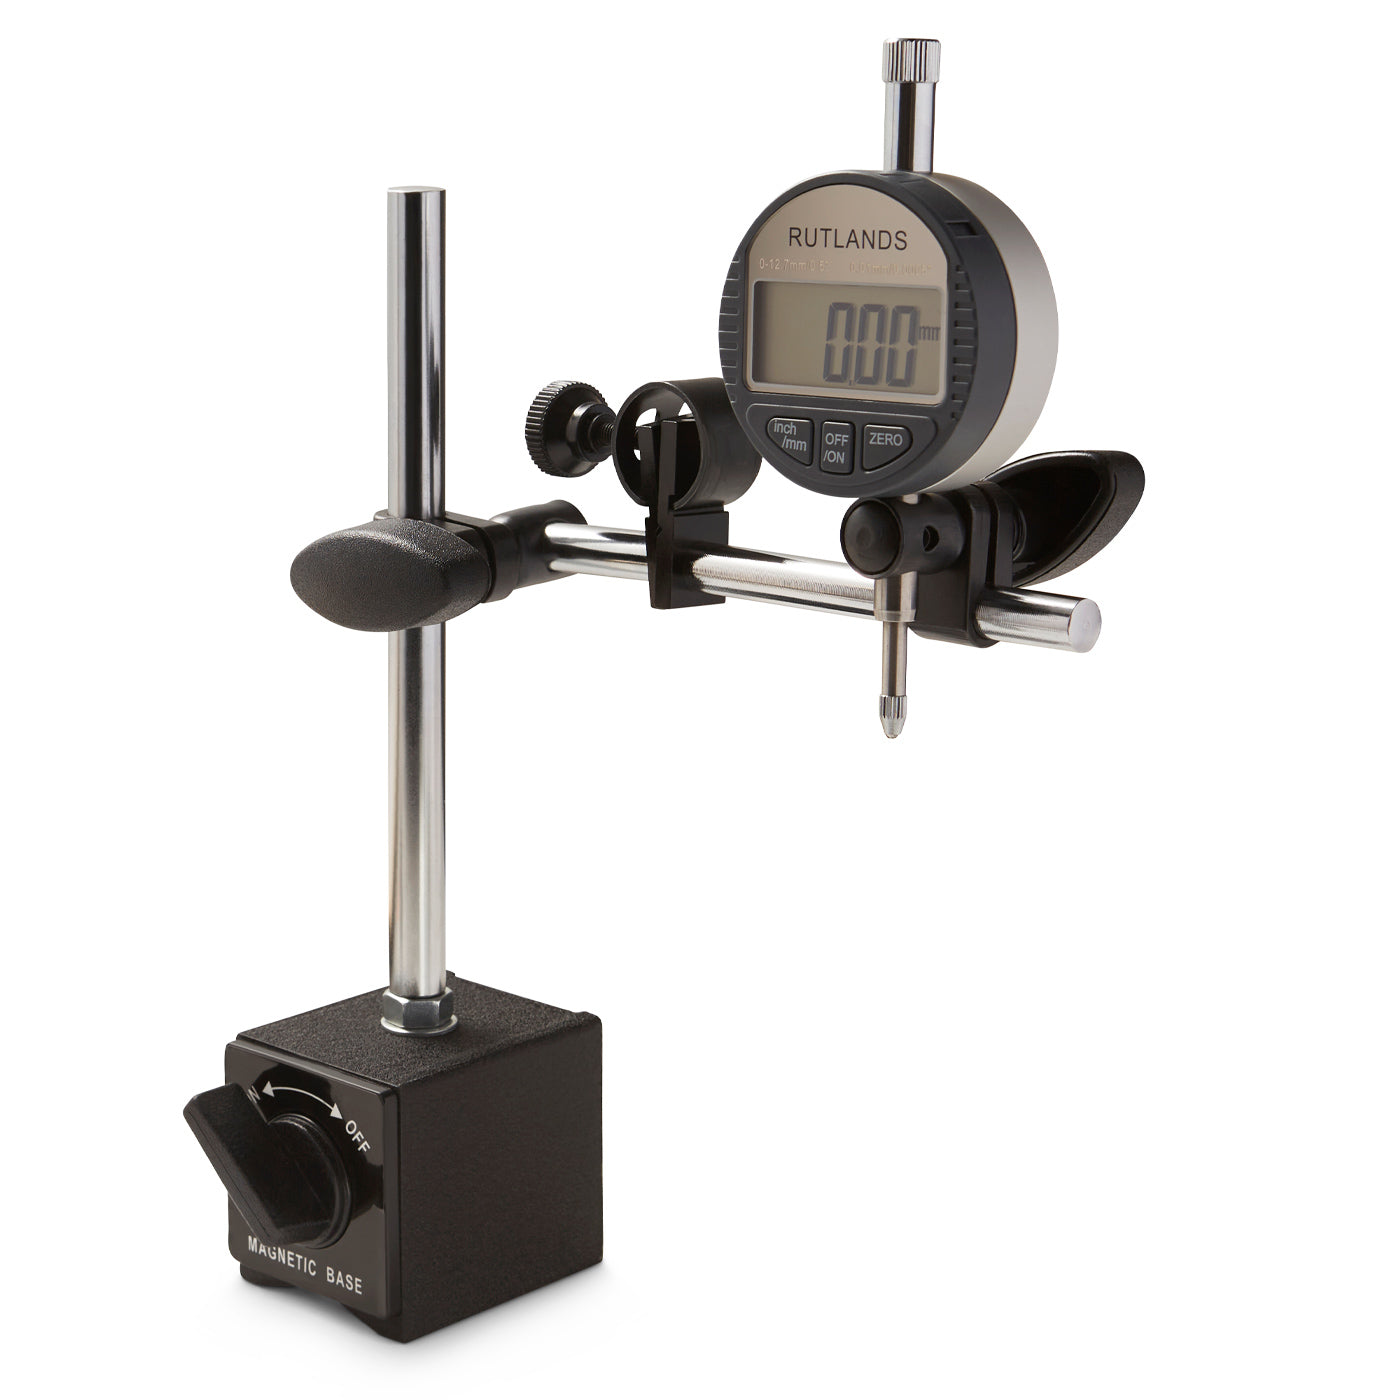 2 Pcs Digital Measuring Tapes Metric inch Scale Measuring Tapes Measuring Tools, Size: 7x7x7CM